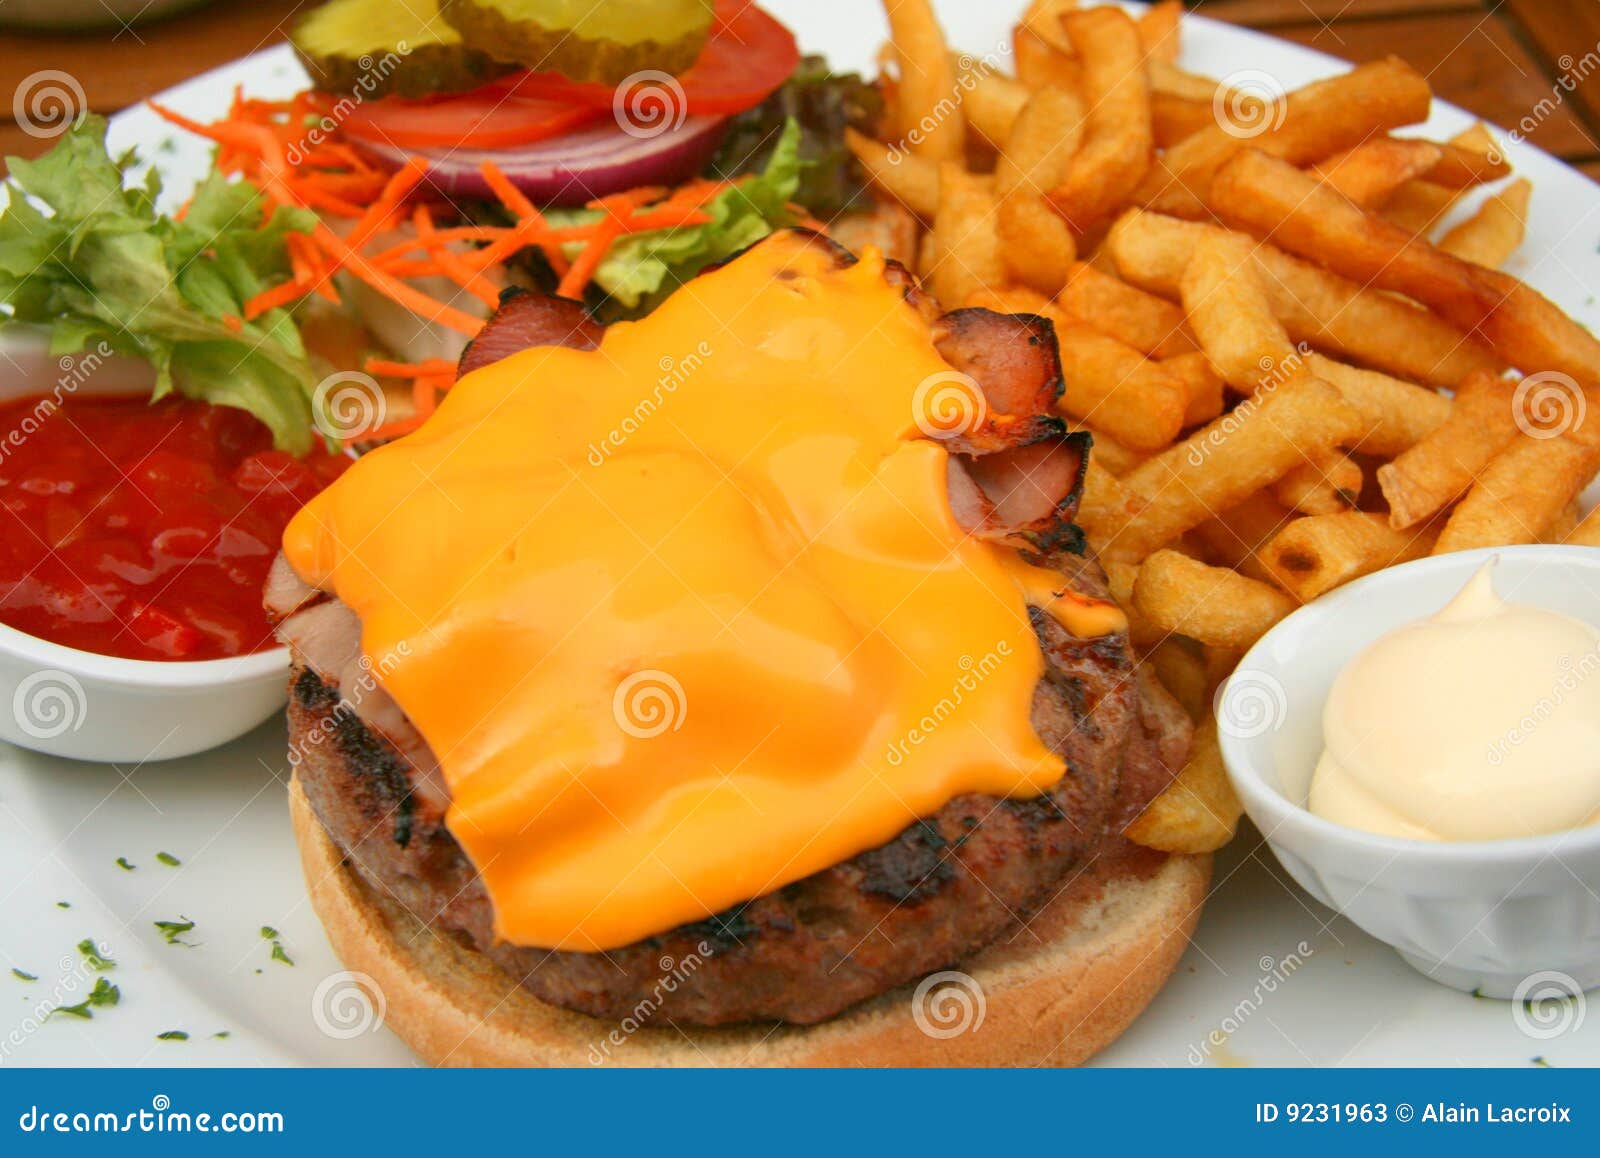 cheeseburger meal